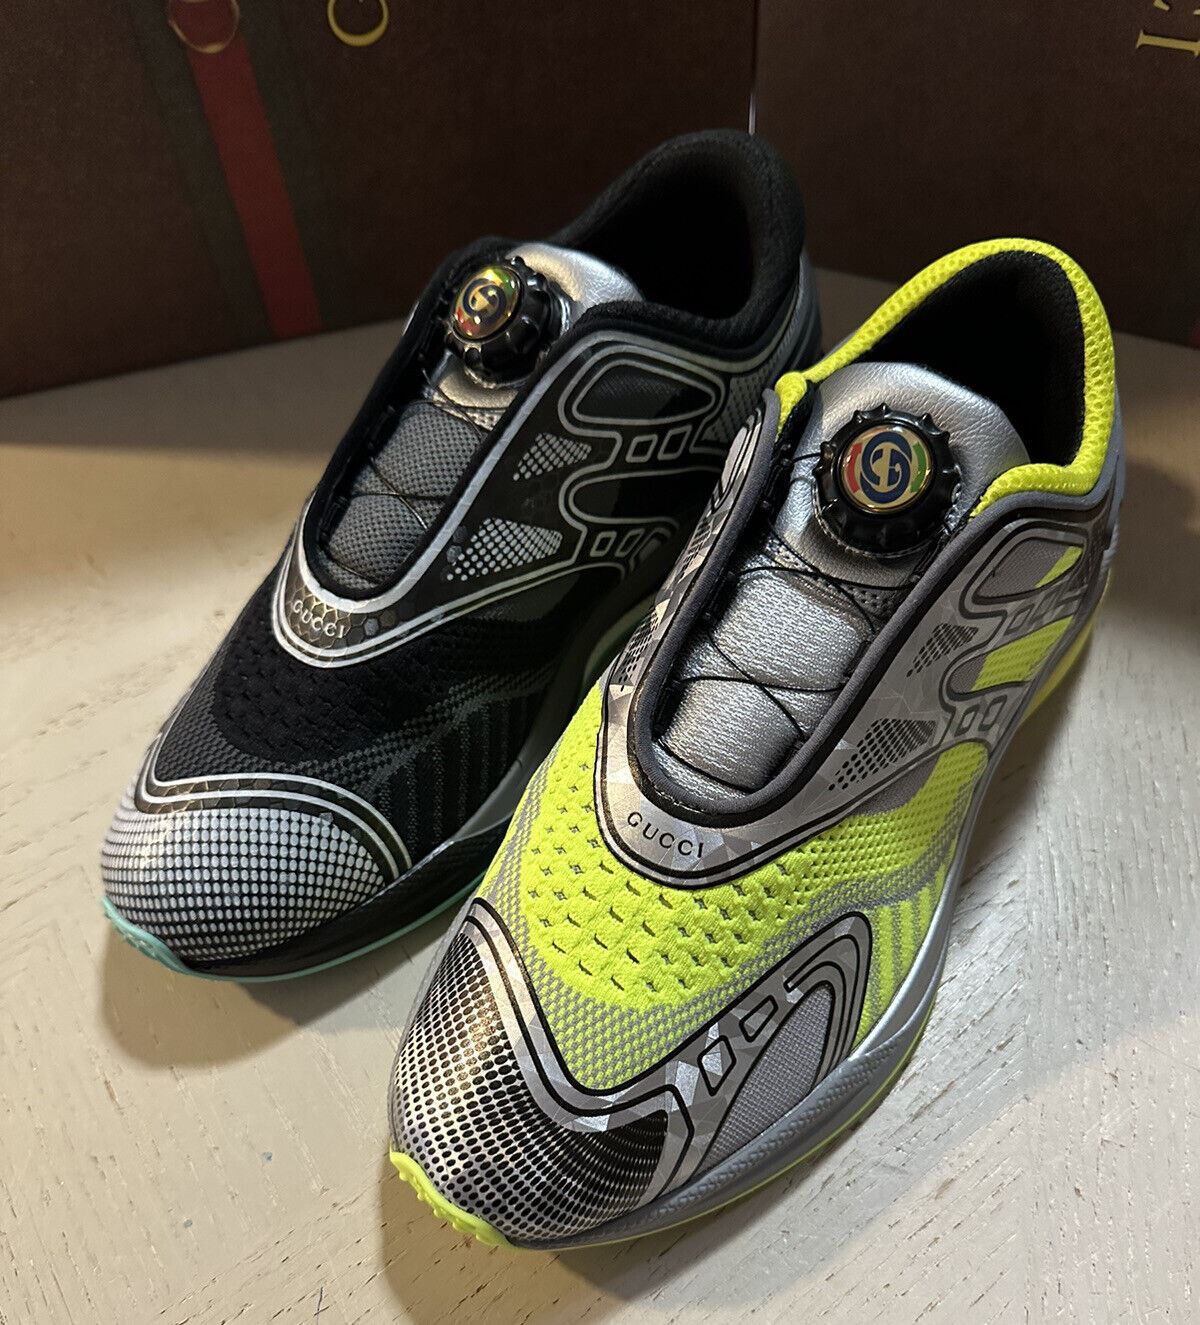 New Gucci Women’s Ultrapace Two-Tone Sneakers Shoes Black/Yellow 6.5 US/36.5 Eu